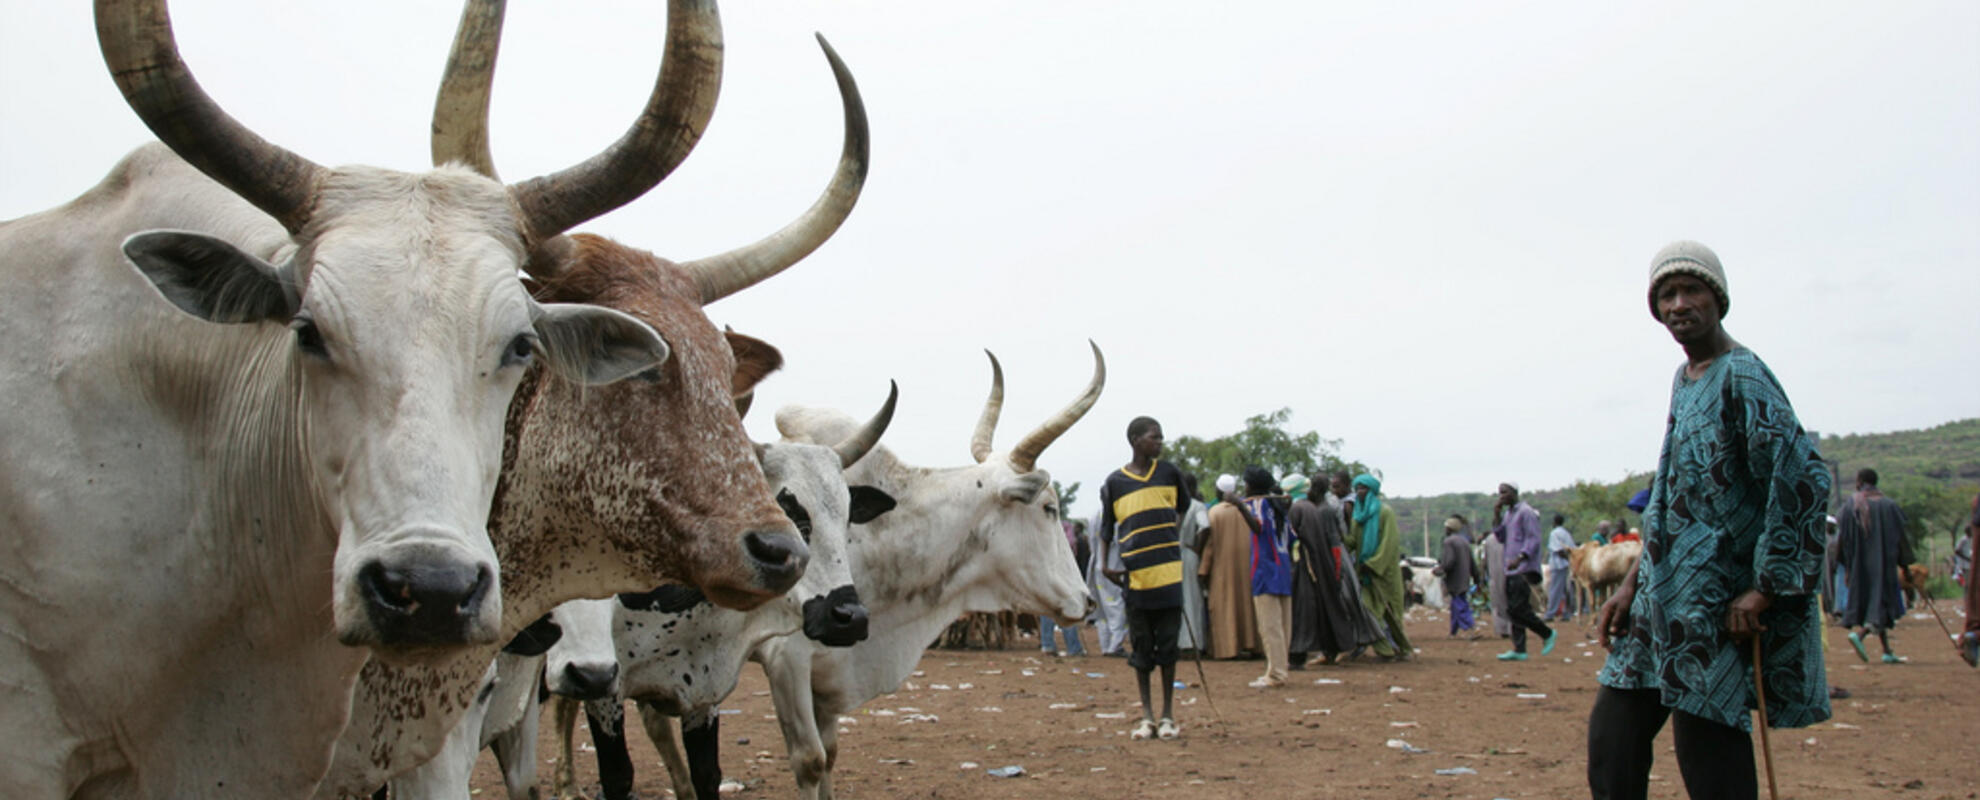 Feed the Future Mali Livestock Technology Scaling Program (FTF-MLTS)